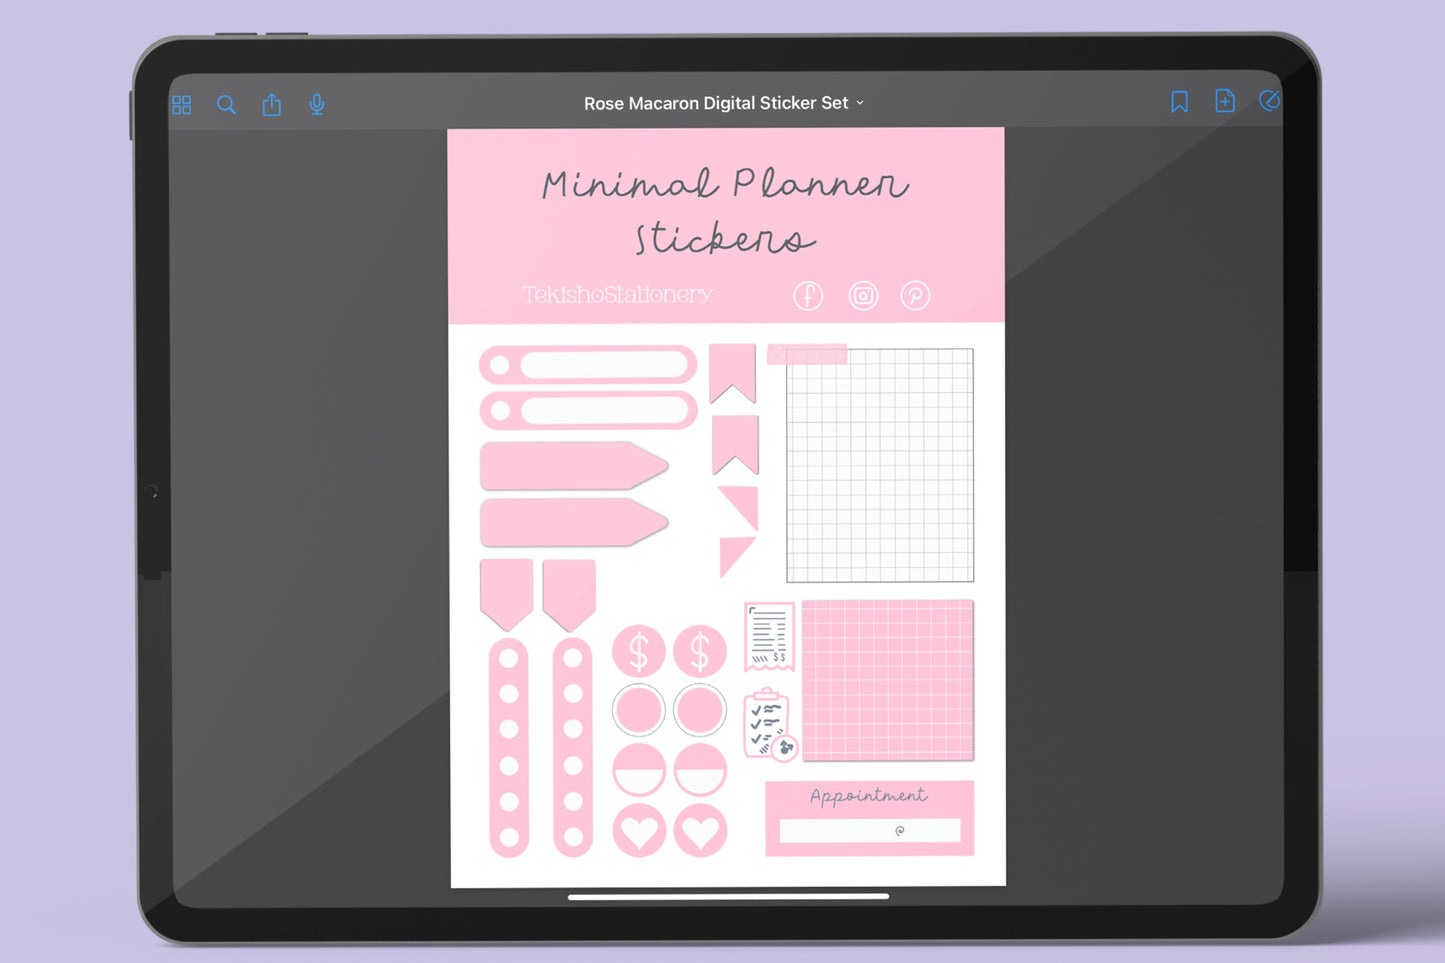 Minimal Digital Planner Precropped Sticker Sets - Rose Macaron